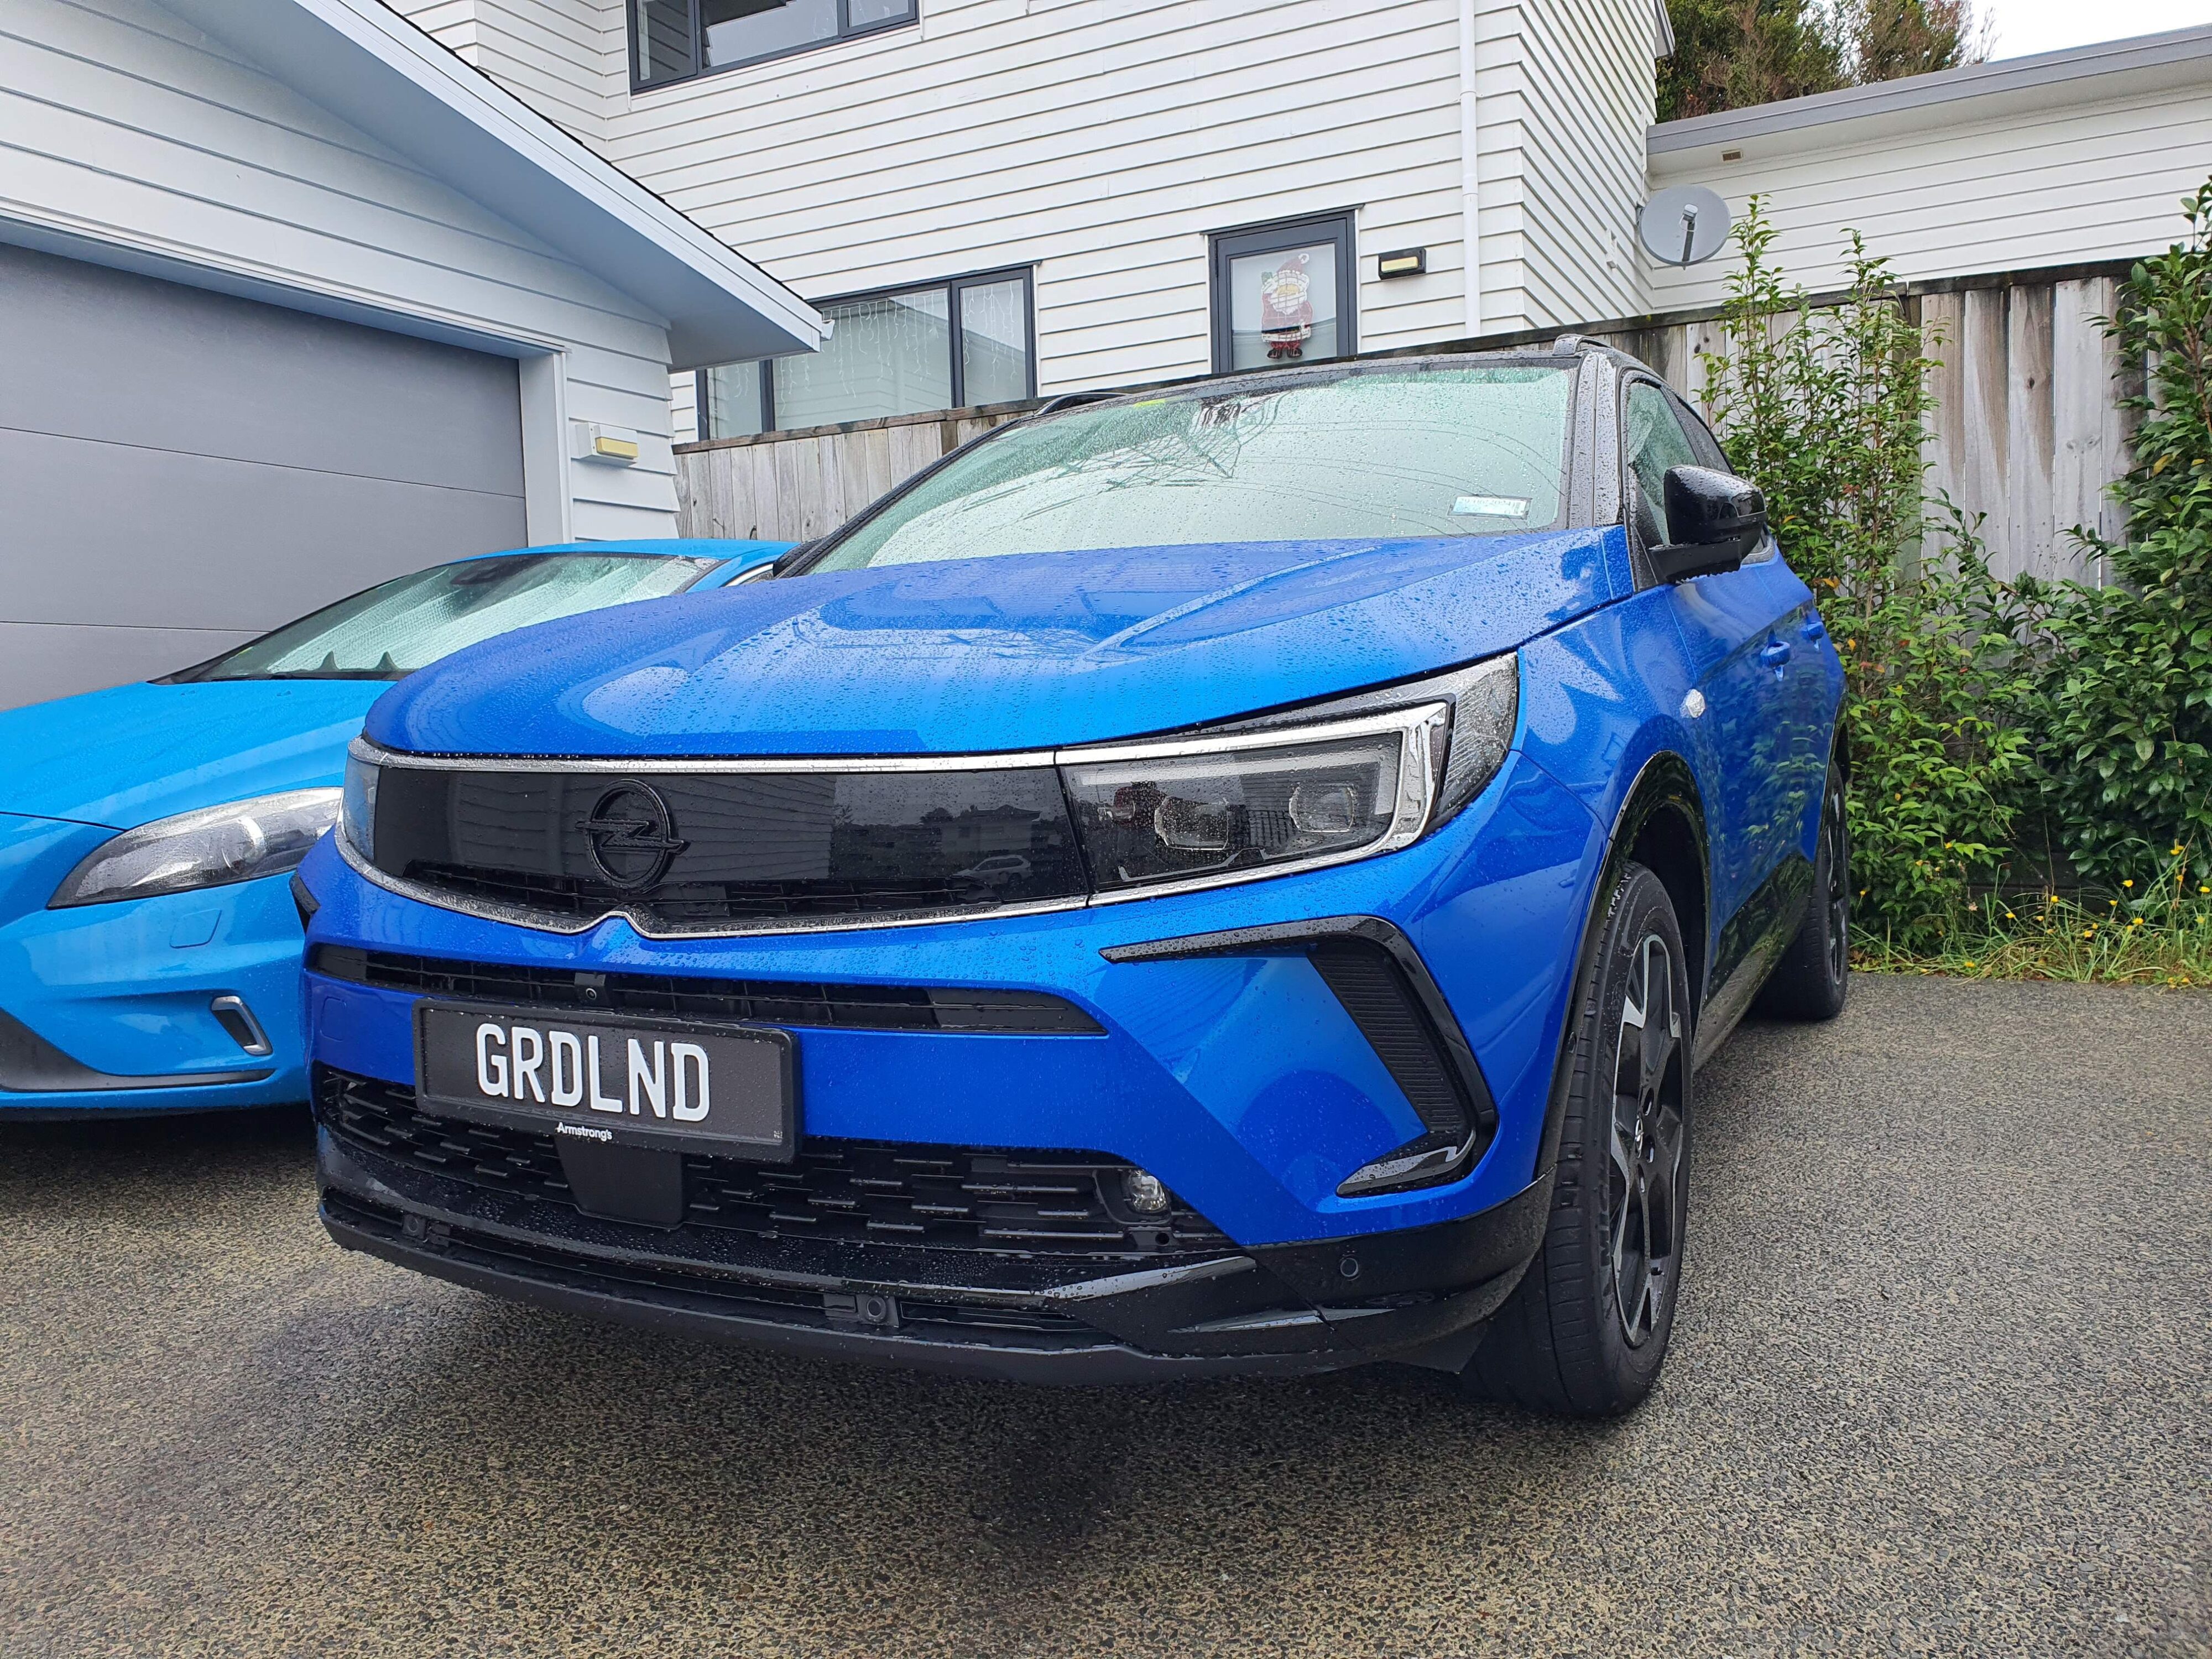 Photo of a Cobalt Blue Opel Grandland SRi on a driveway.